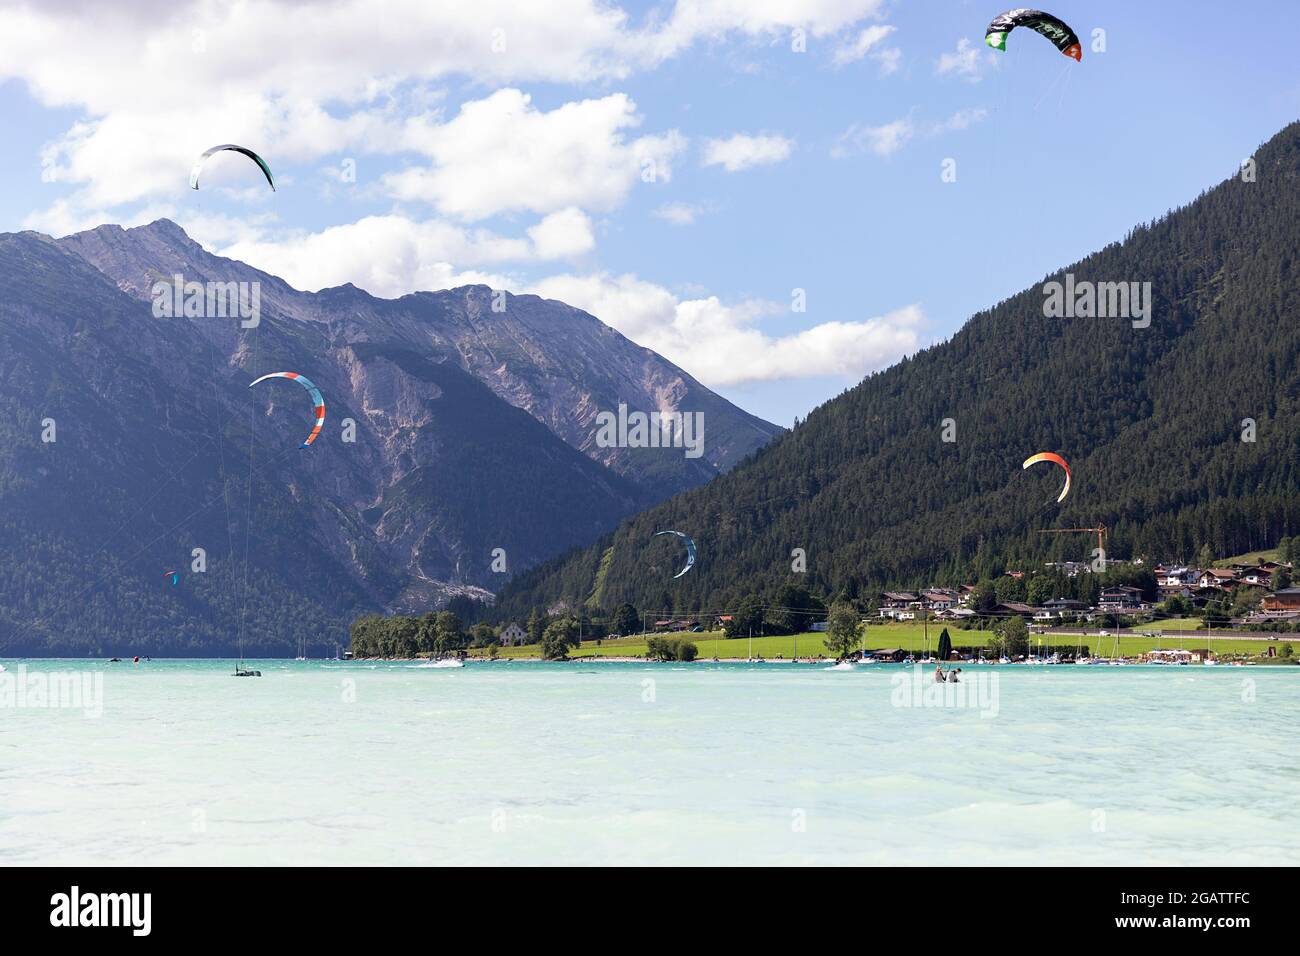 kite surfing on mountain lake in summer alpine landscape. Achensee, Achen Lake, Austria, Tyrol Stock Photo